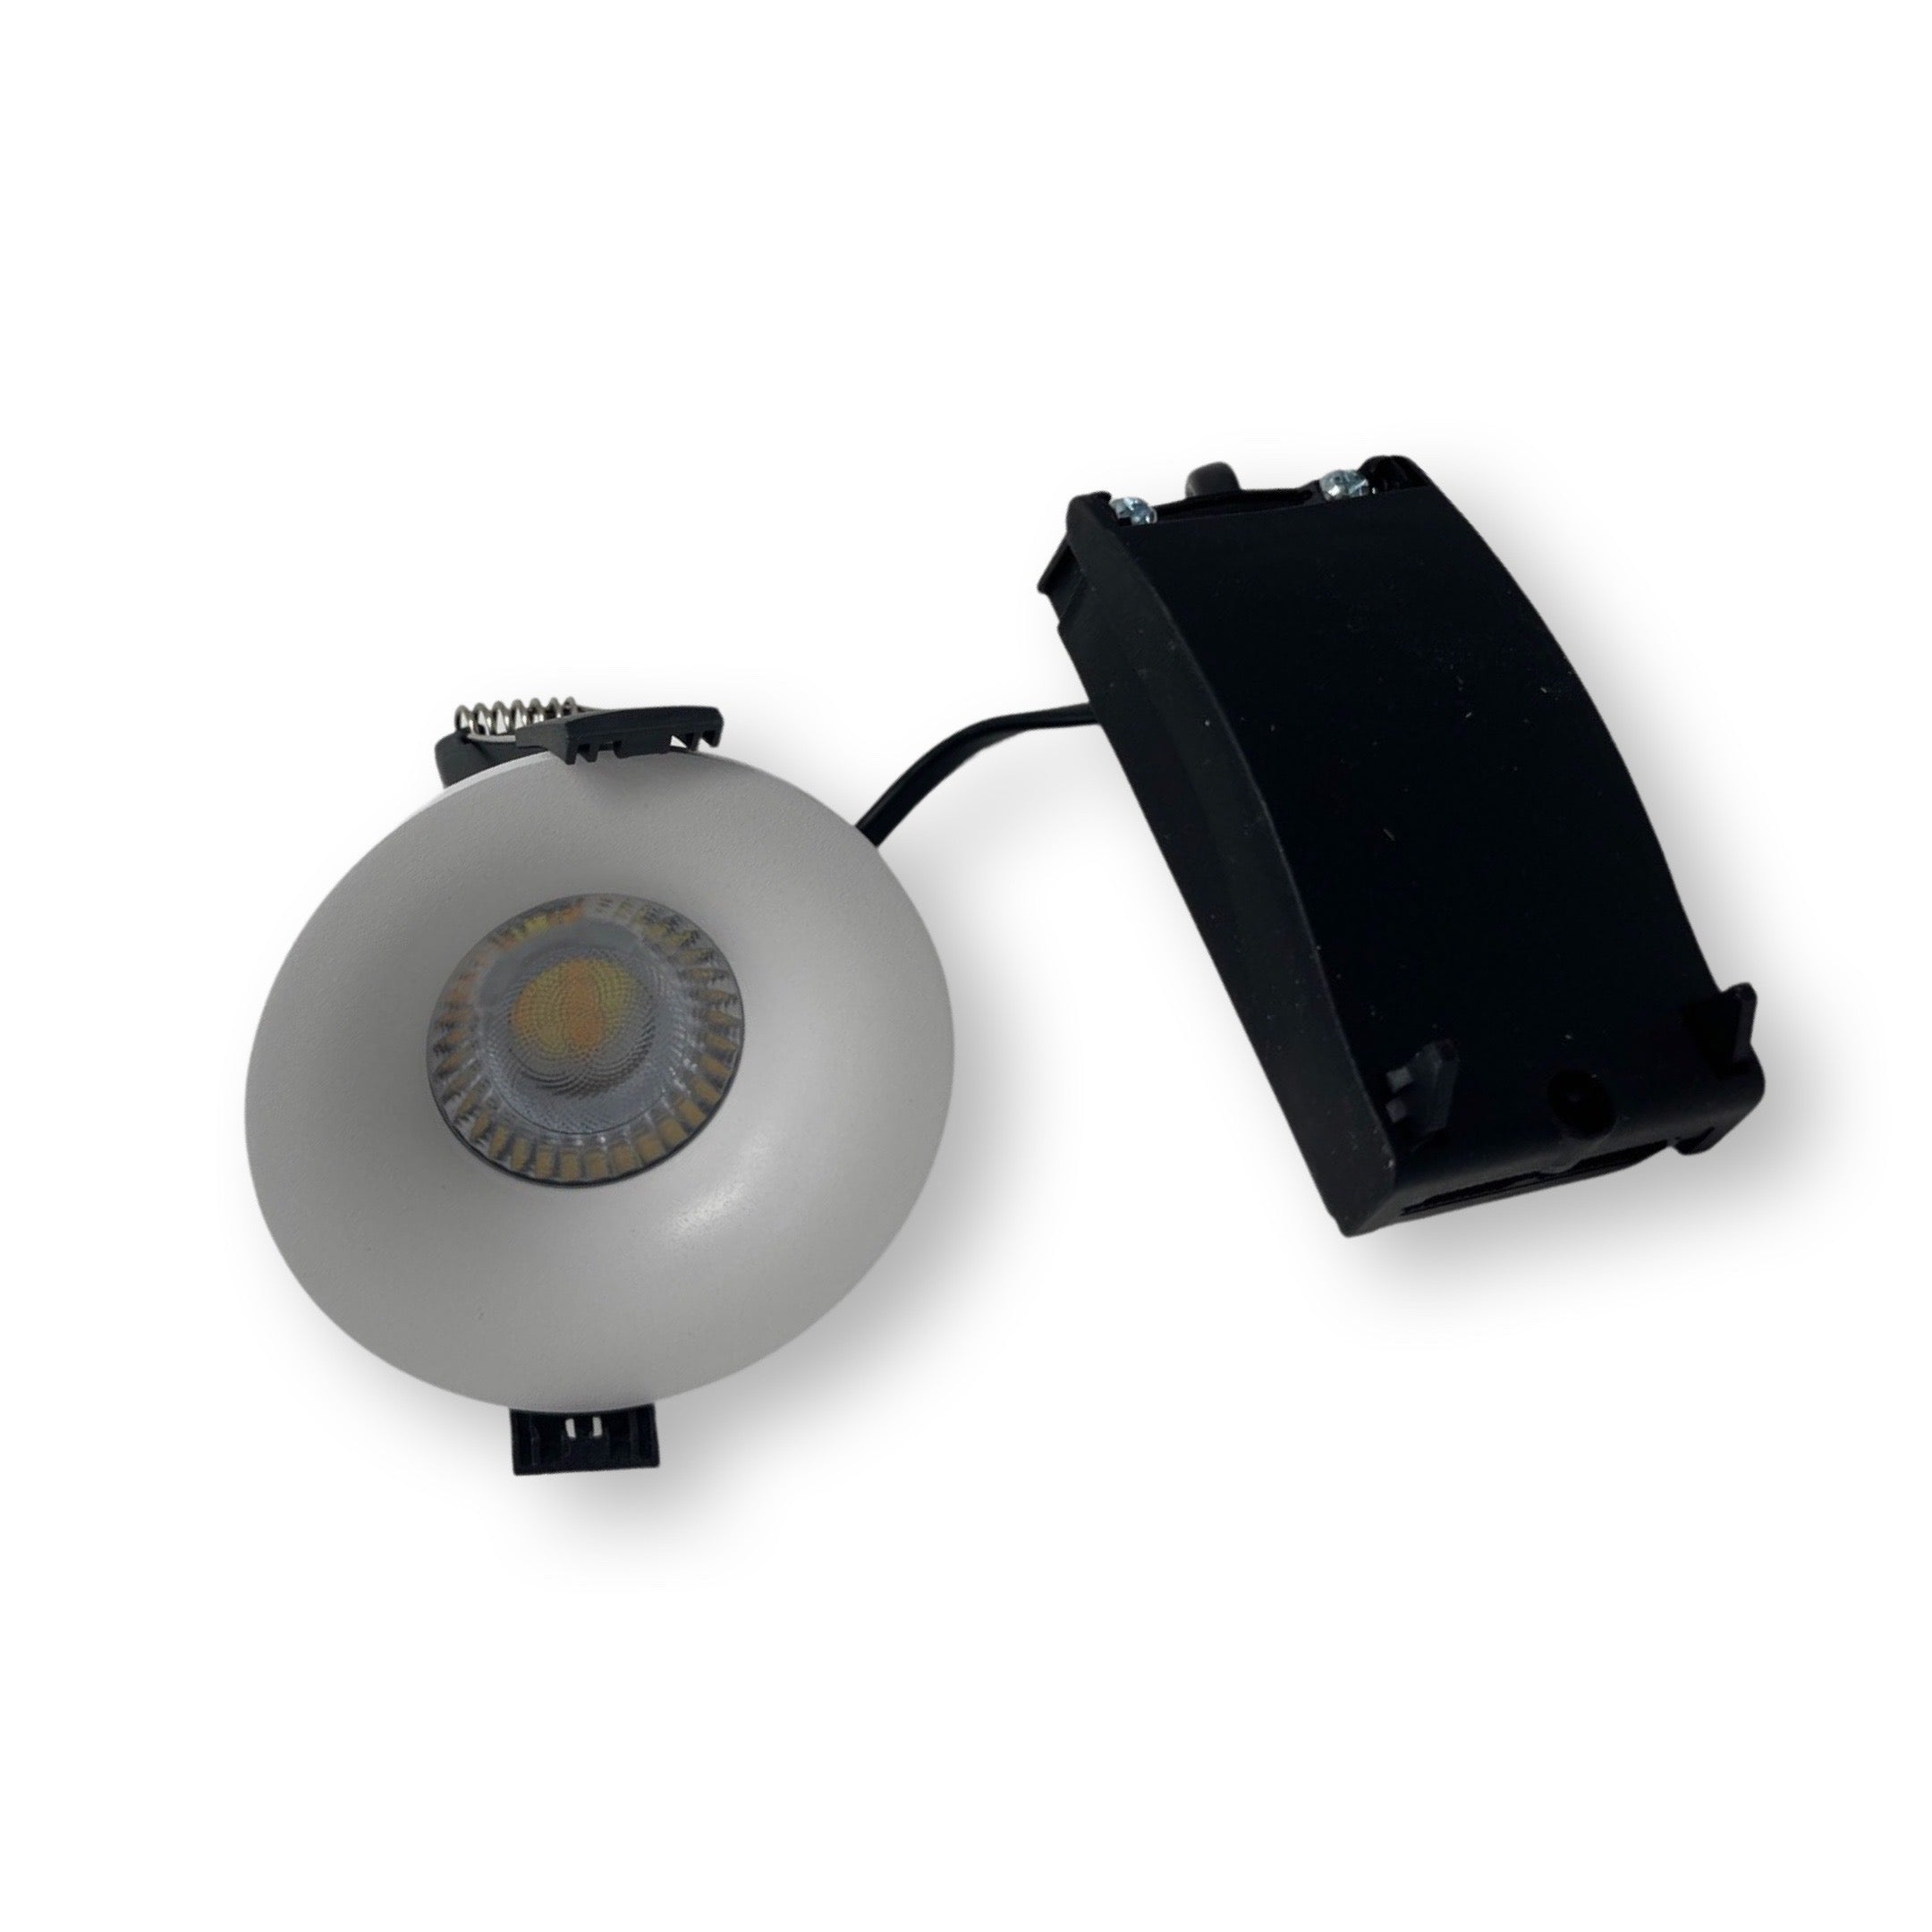 LED DownLight 7w Spotlight Waterproof IP65 White Dimmable CCT - Light fixtures UK